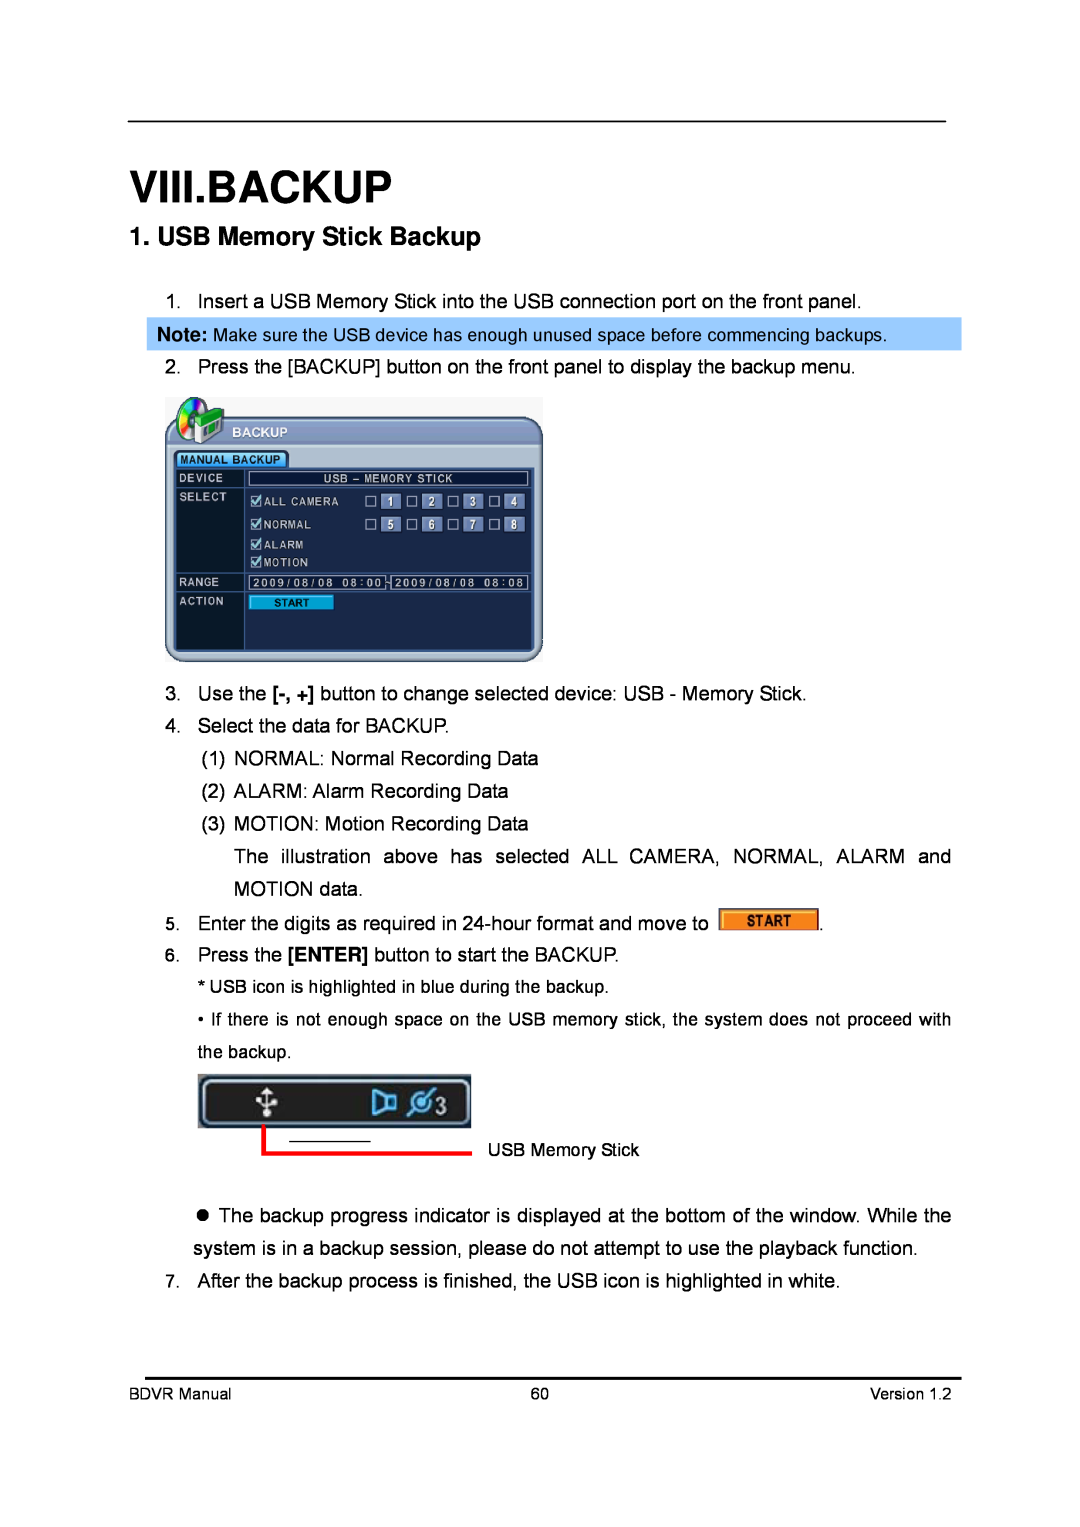 Genie BDVR-16, BDVR-8, BDVR-4 manual Viii.Backup, USB Memory Stick Backup 